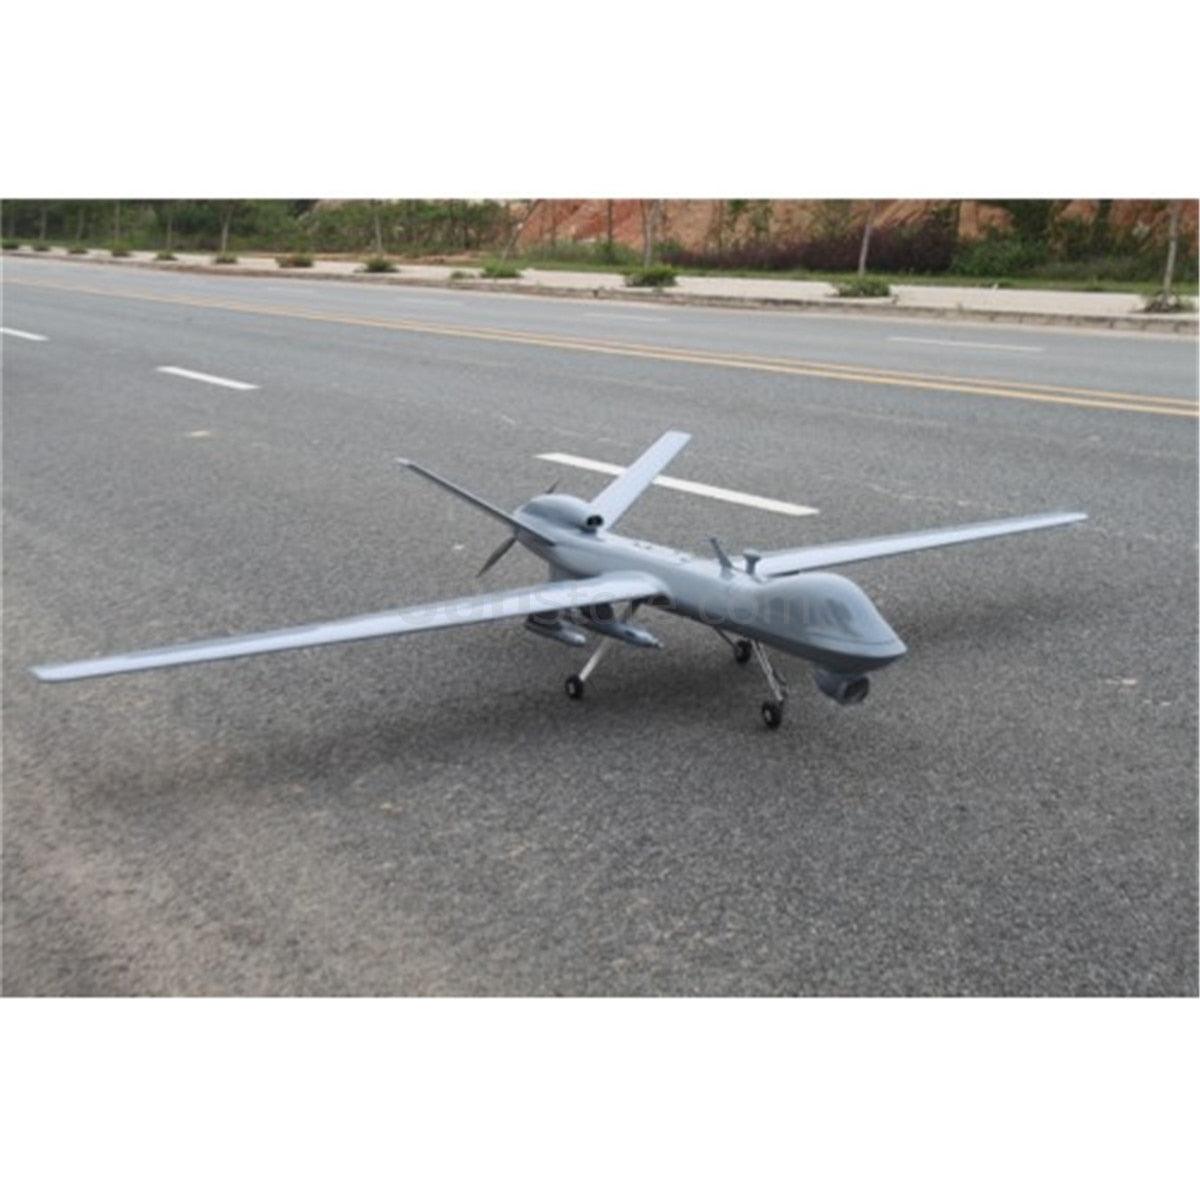 MQ-9 UAV Scale Predator of Fiberglass/Balsa Construction FPV/UAV Composite Platform MQ9 Reaper KIT - RCDrone